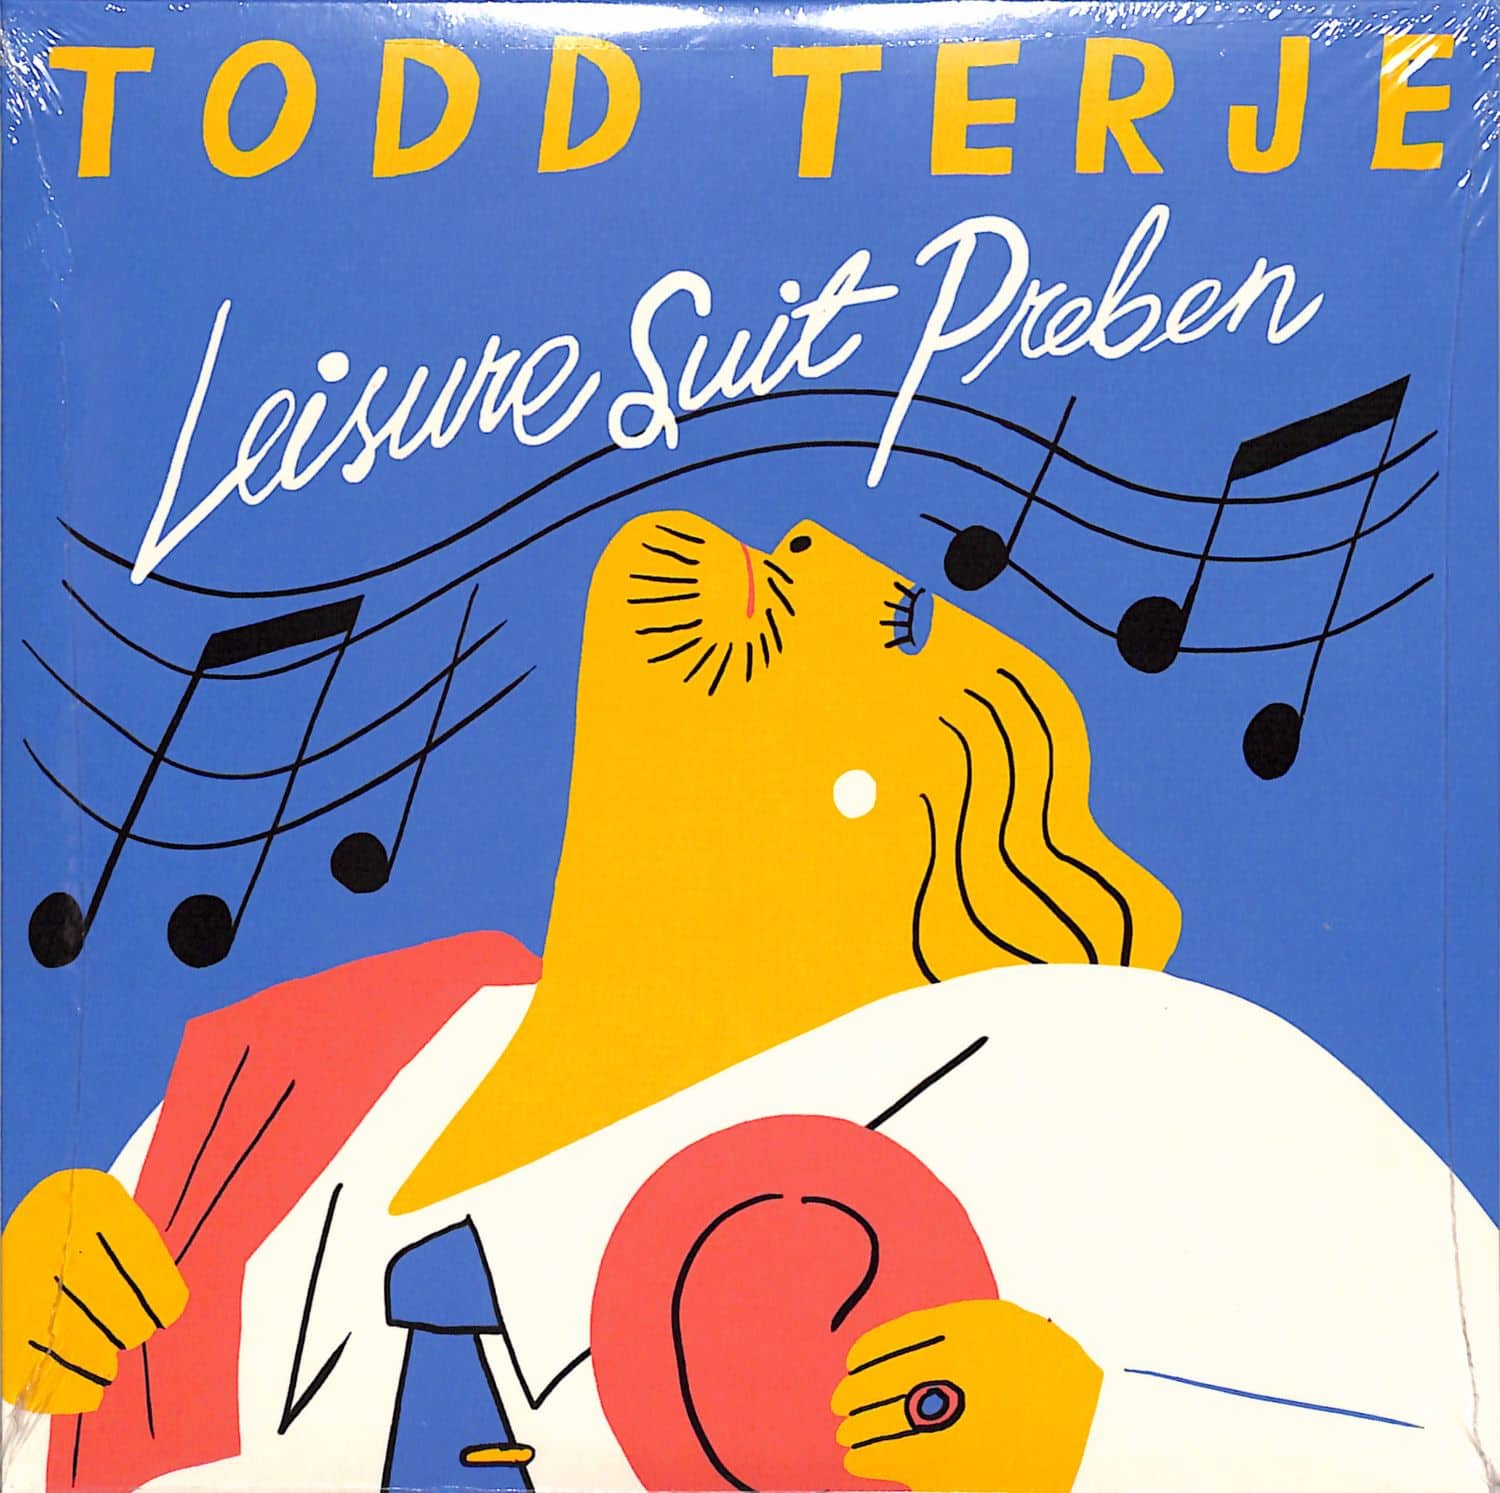 Todd Terje - LEISURE SUIT PREBEN 